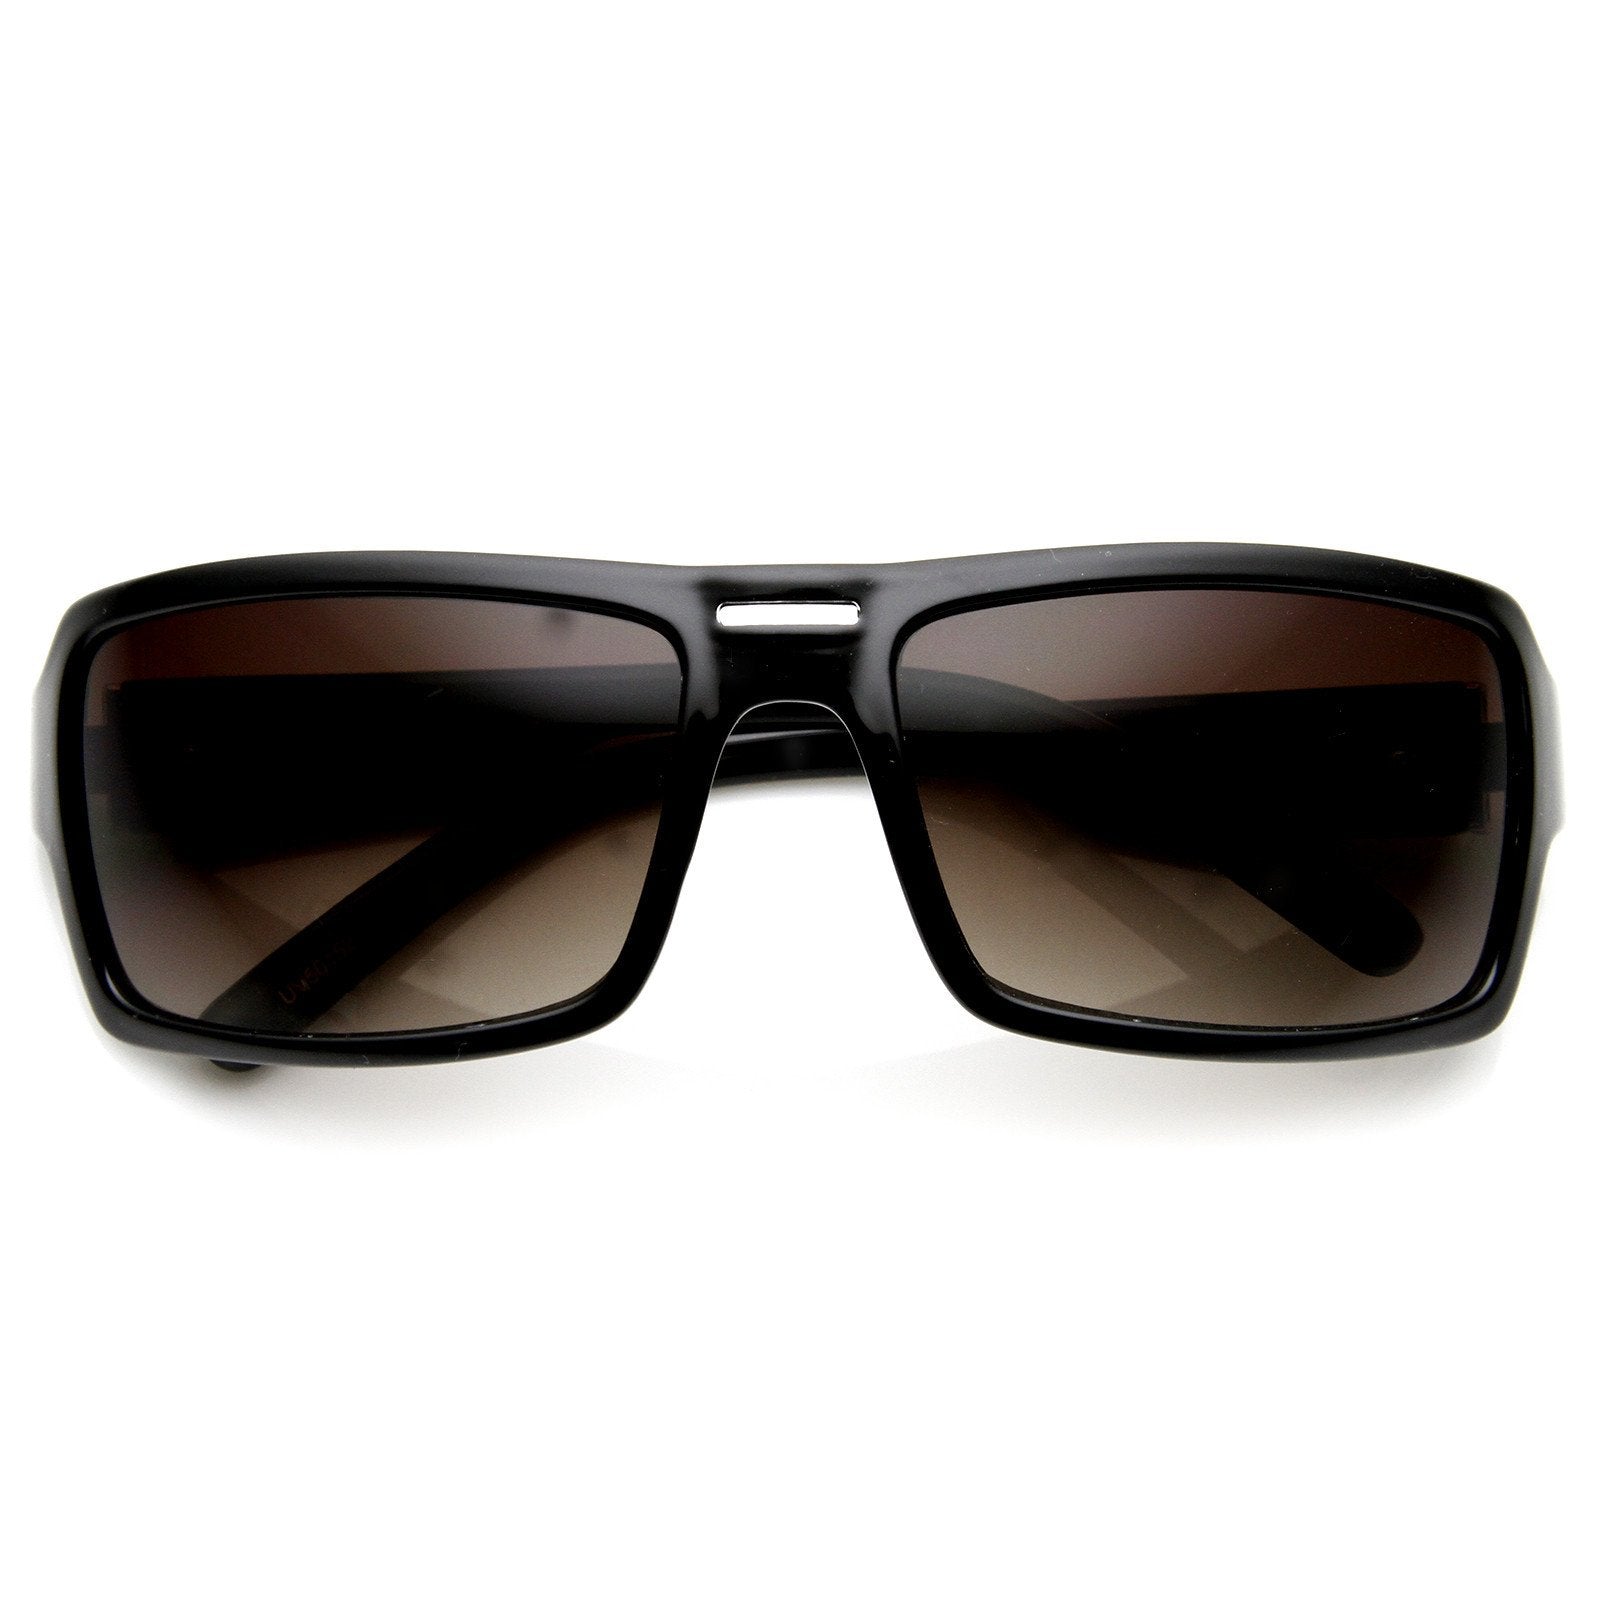 Mens Retro Super Flat Top Aviator Square Sunglasses 8685  Aviator square  sunglasses, Retro aviator sunglasses, Sunglasses